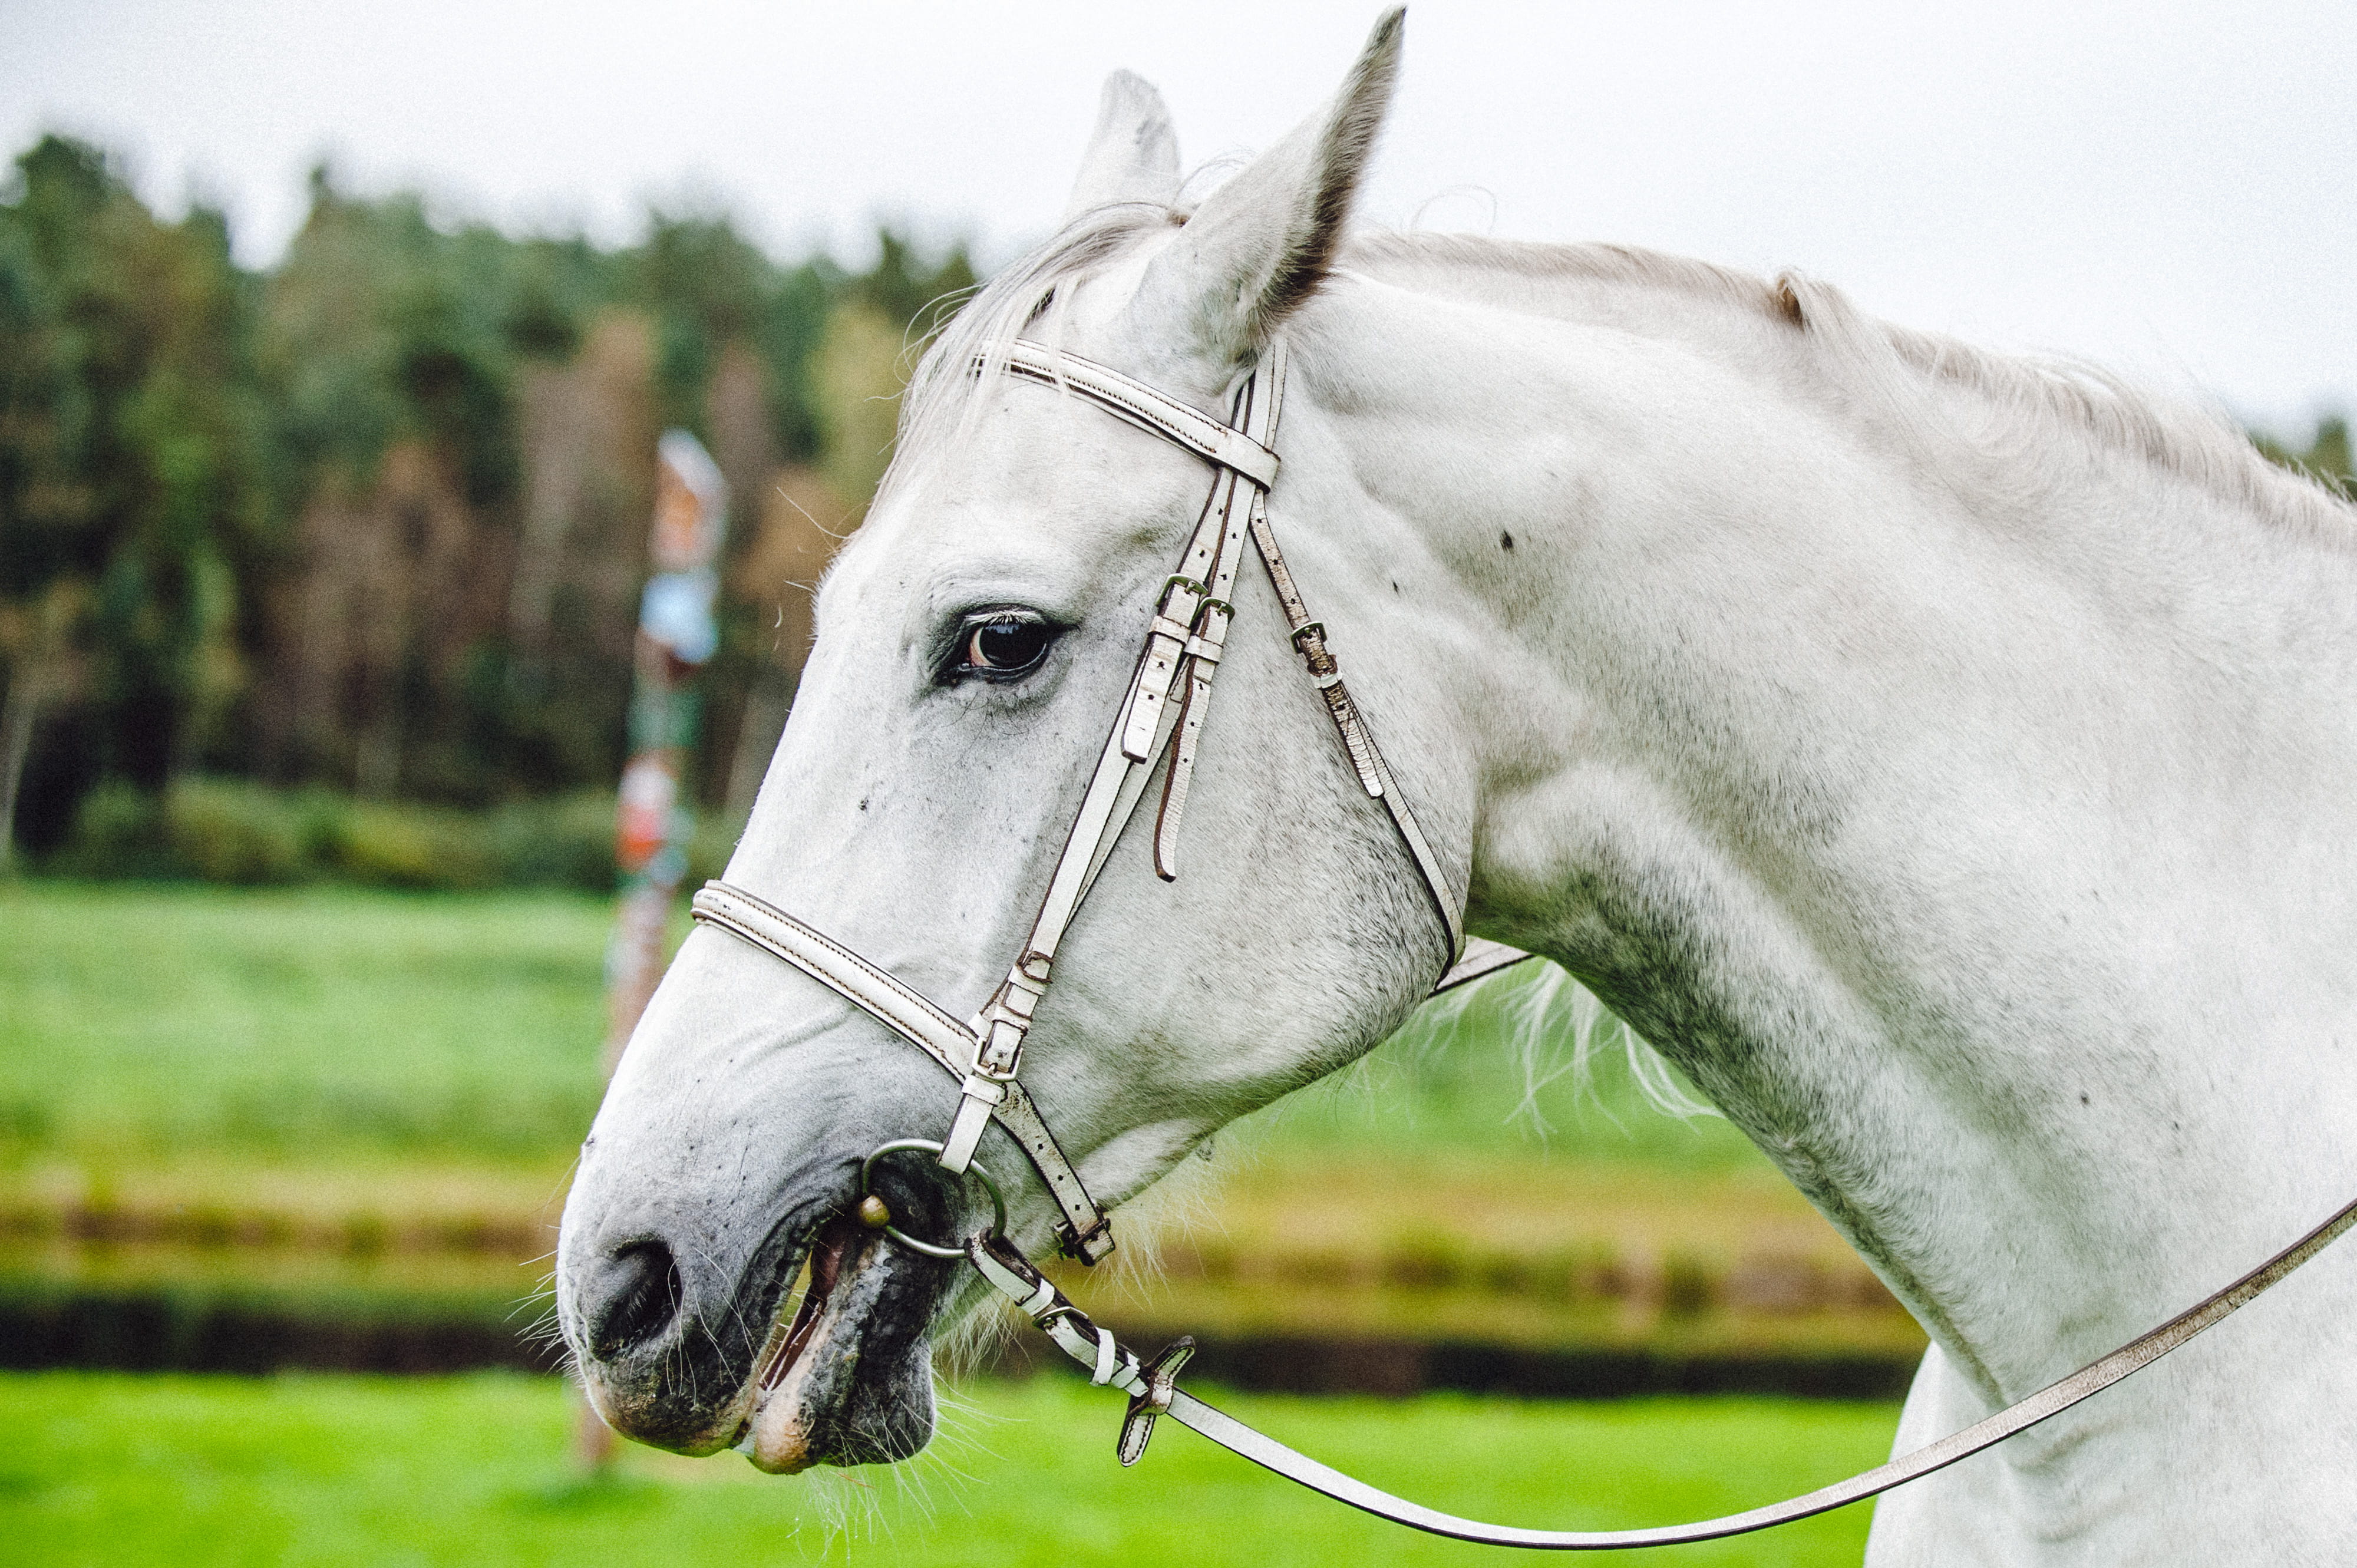 Gray dressage horse, animals, outdoors, nature, farm, rural Scene